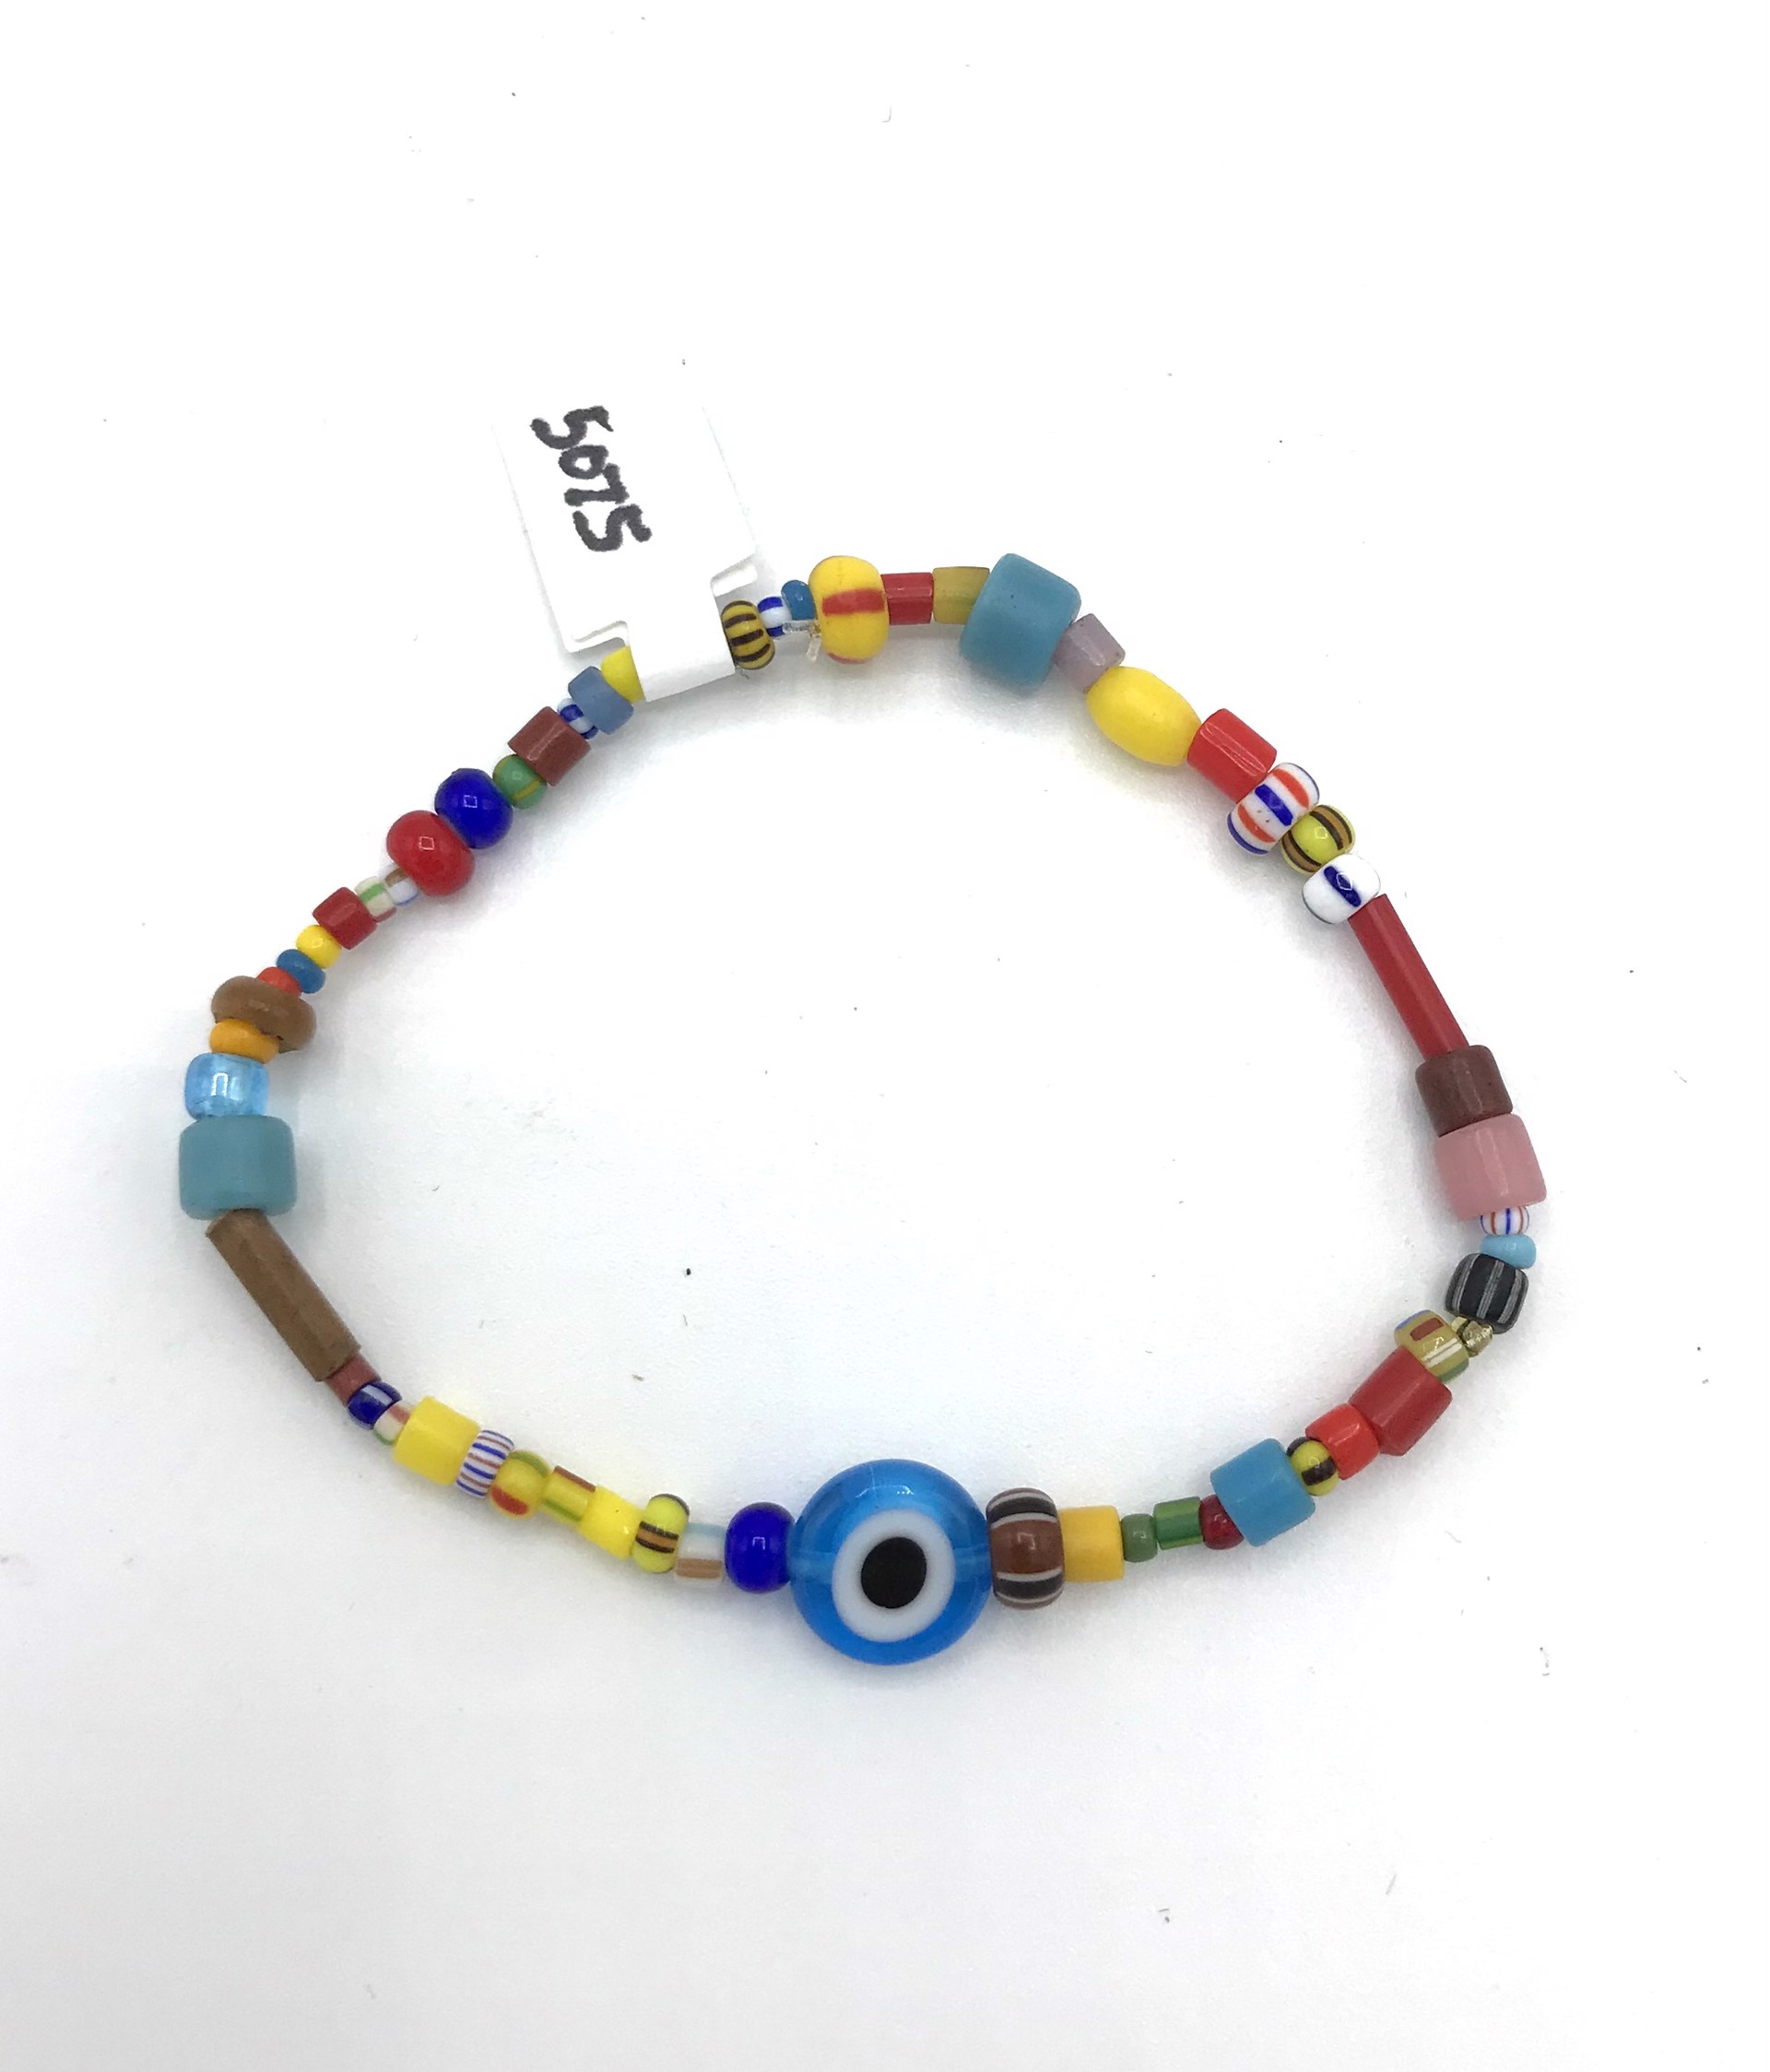 Multicolored Beads With Aqua Evil Eye Bracelet by Emelie Hebert